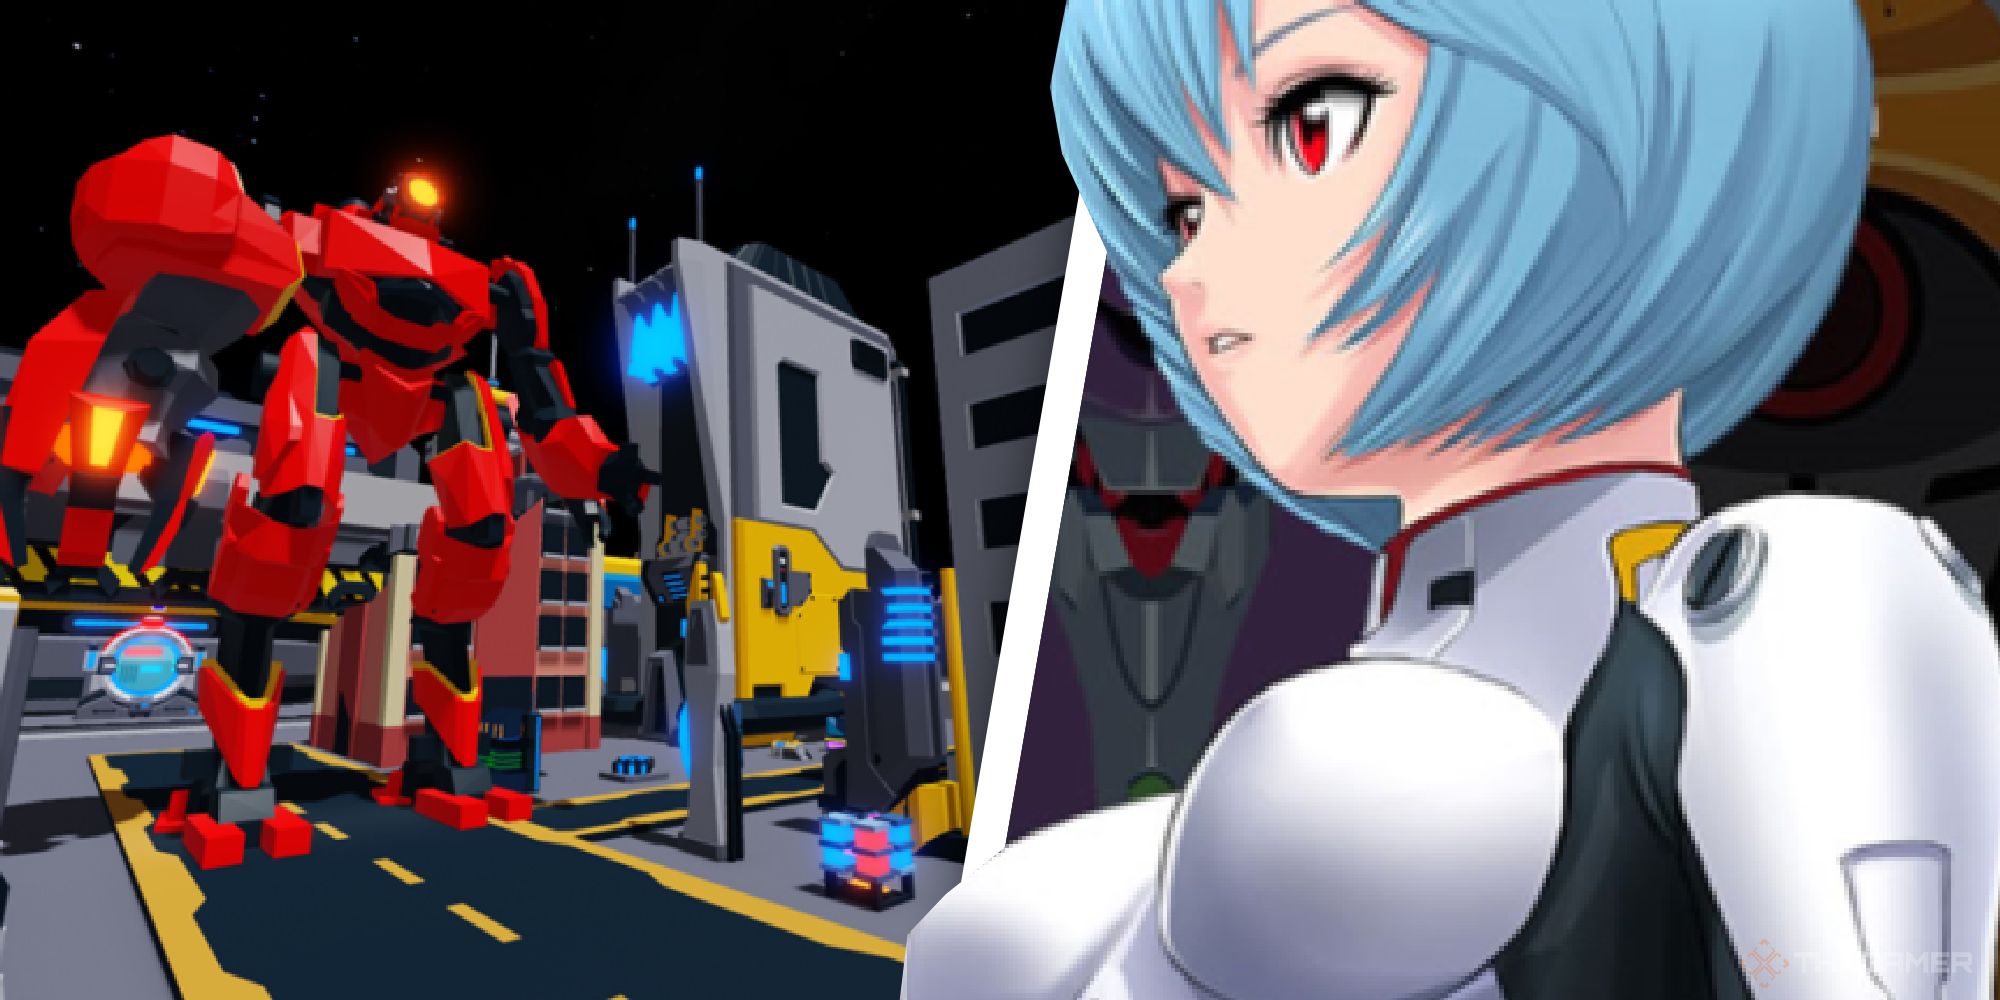 Codigos Anime Warriors Simulator 2 – Roblox Diciembre 2023